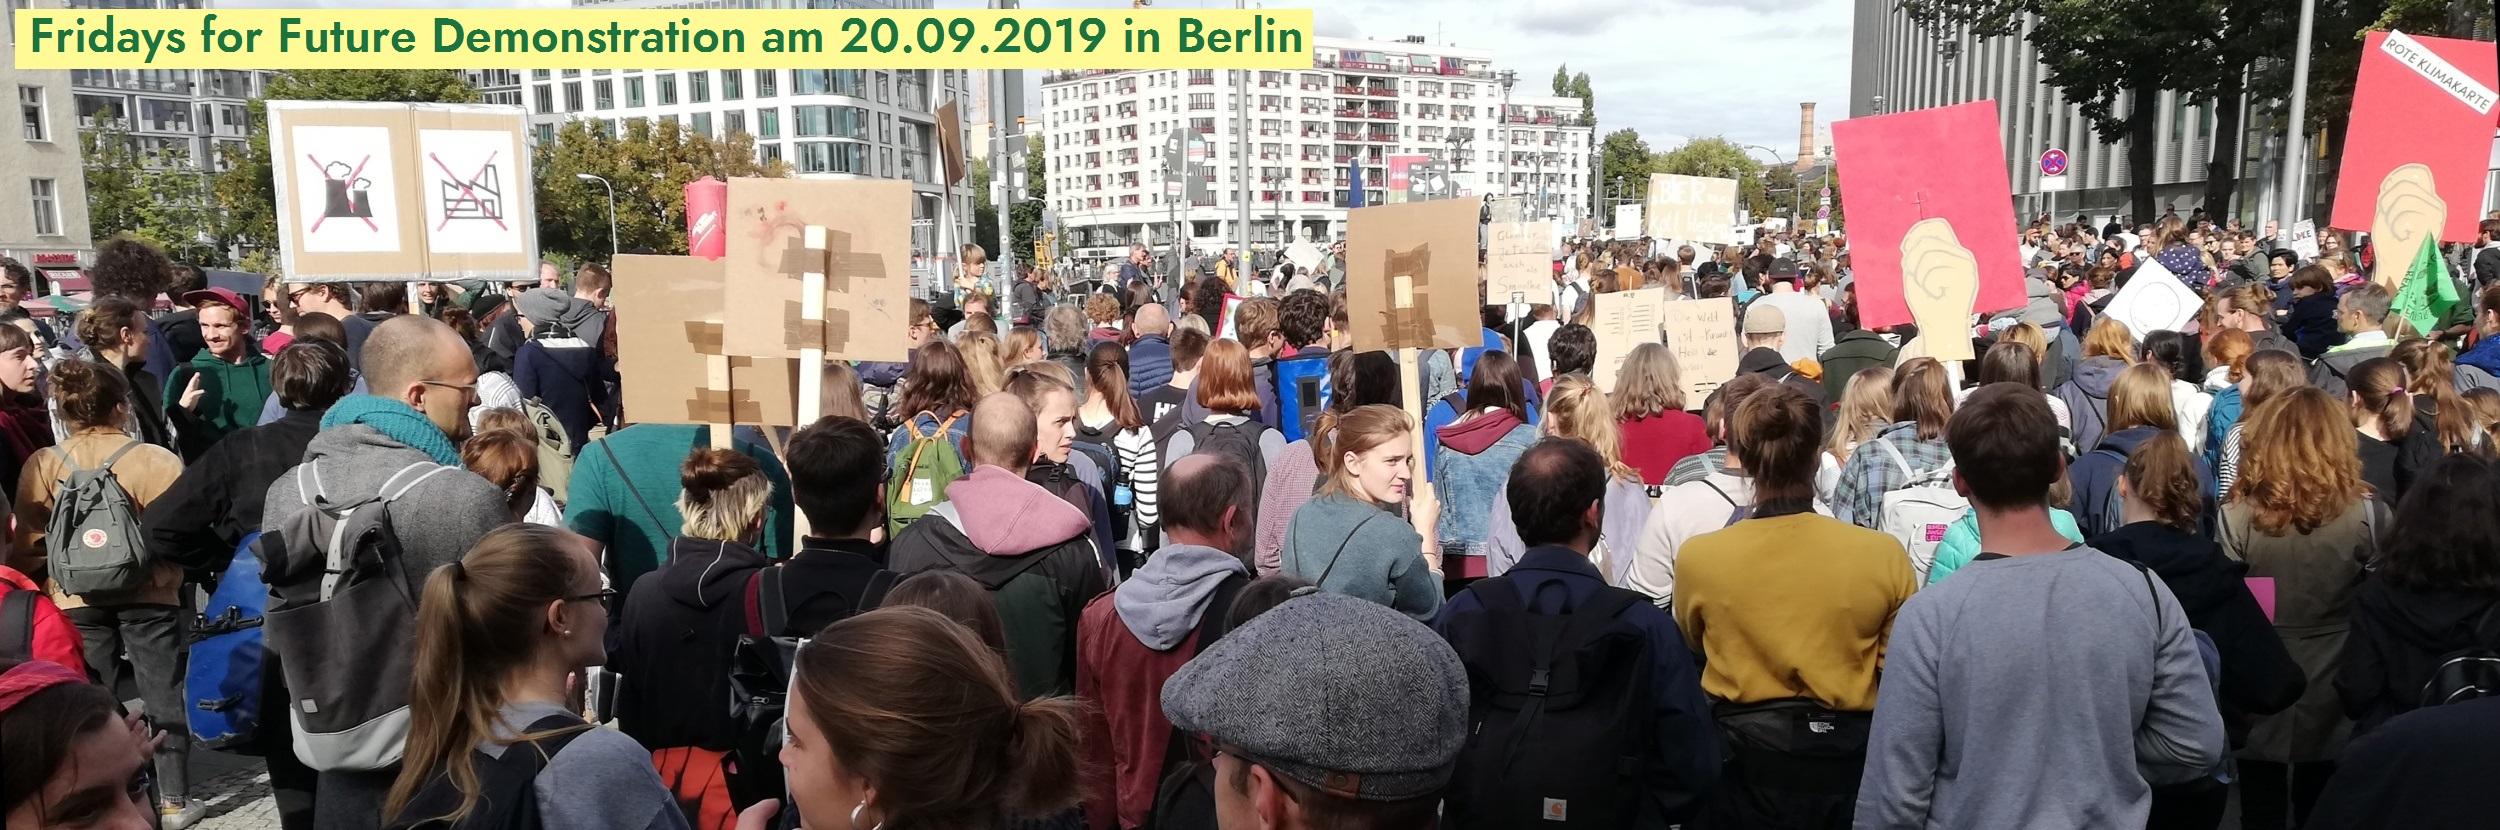 Fridays for Future in Berlin/Germany on 20.09.2019 [Copyright (c) 2019 Steffen Kopf. Alle Rechte vorbehalten.]